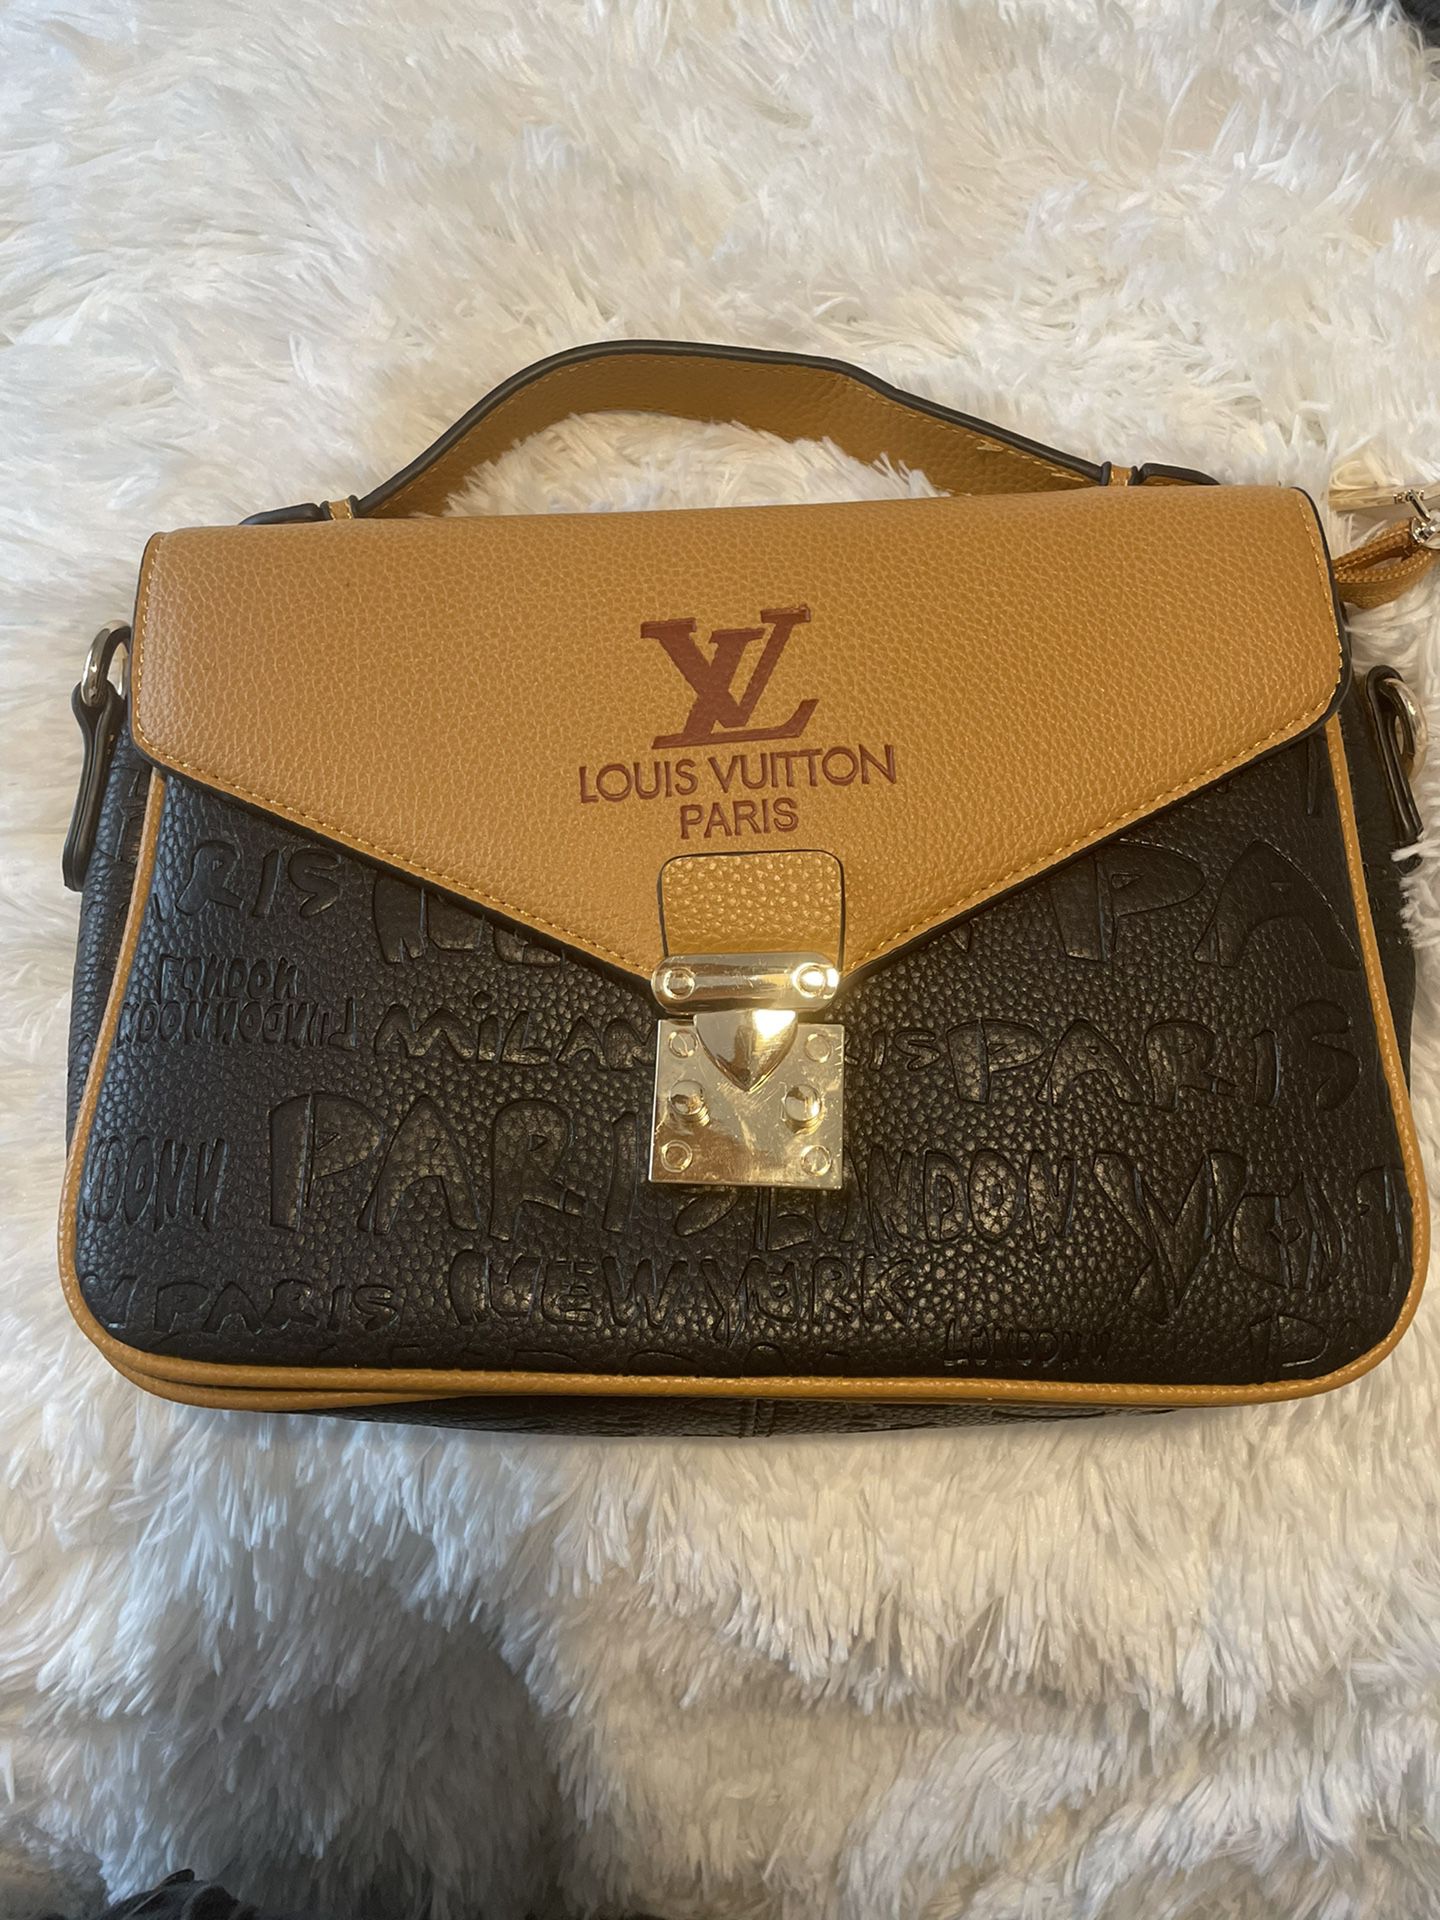 Luxury Handbag Tan And Black 